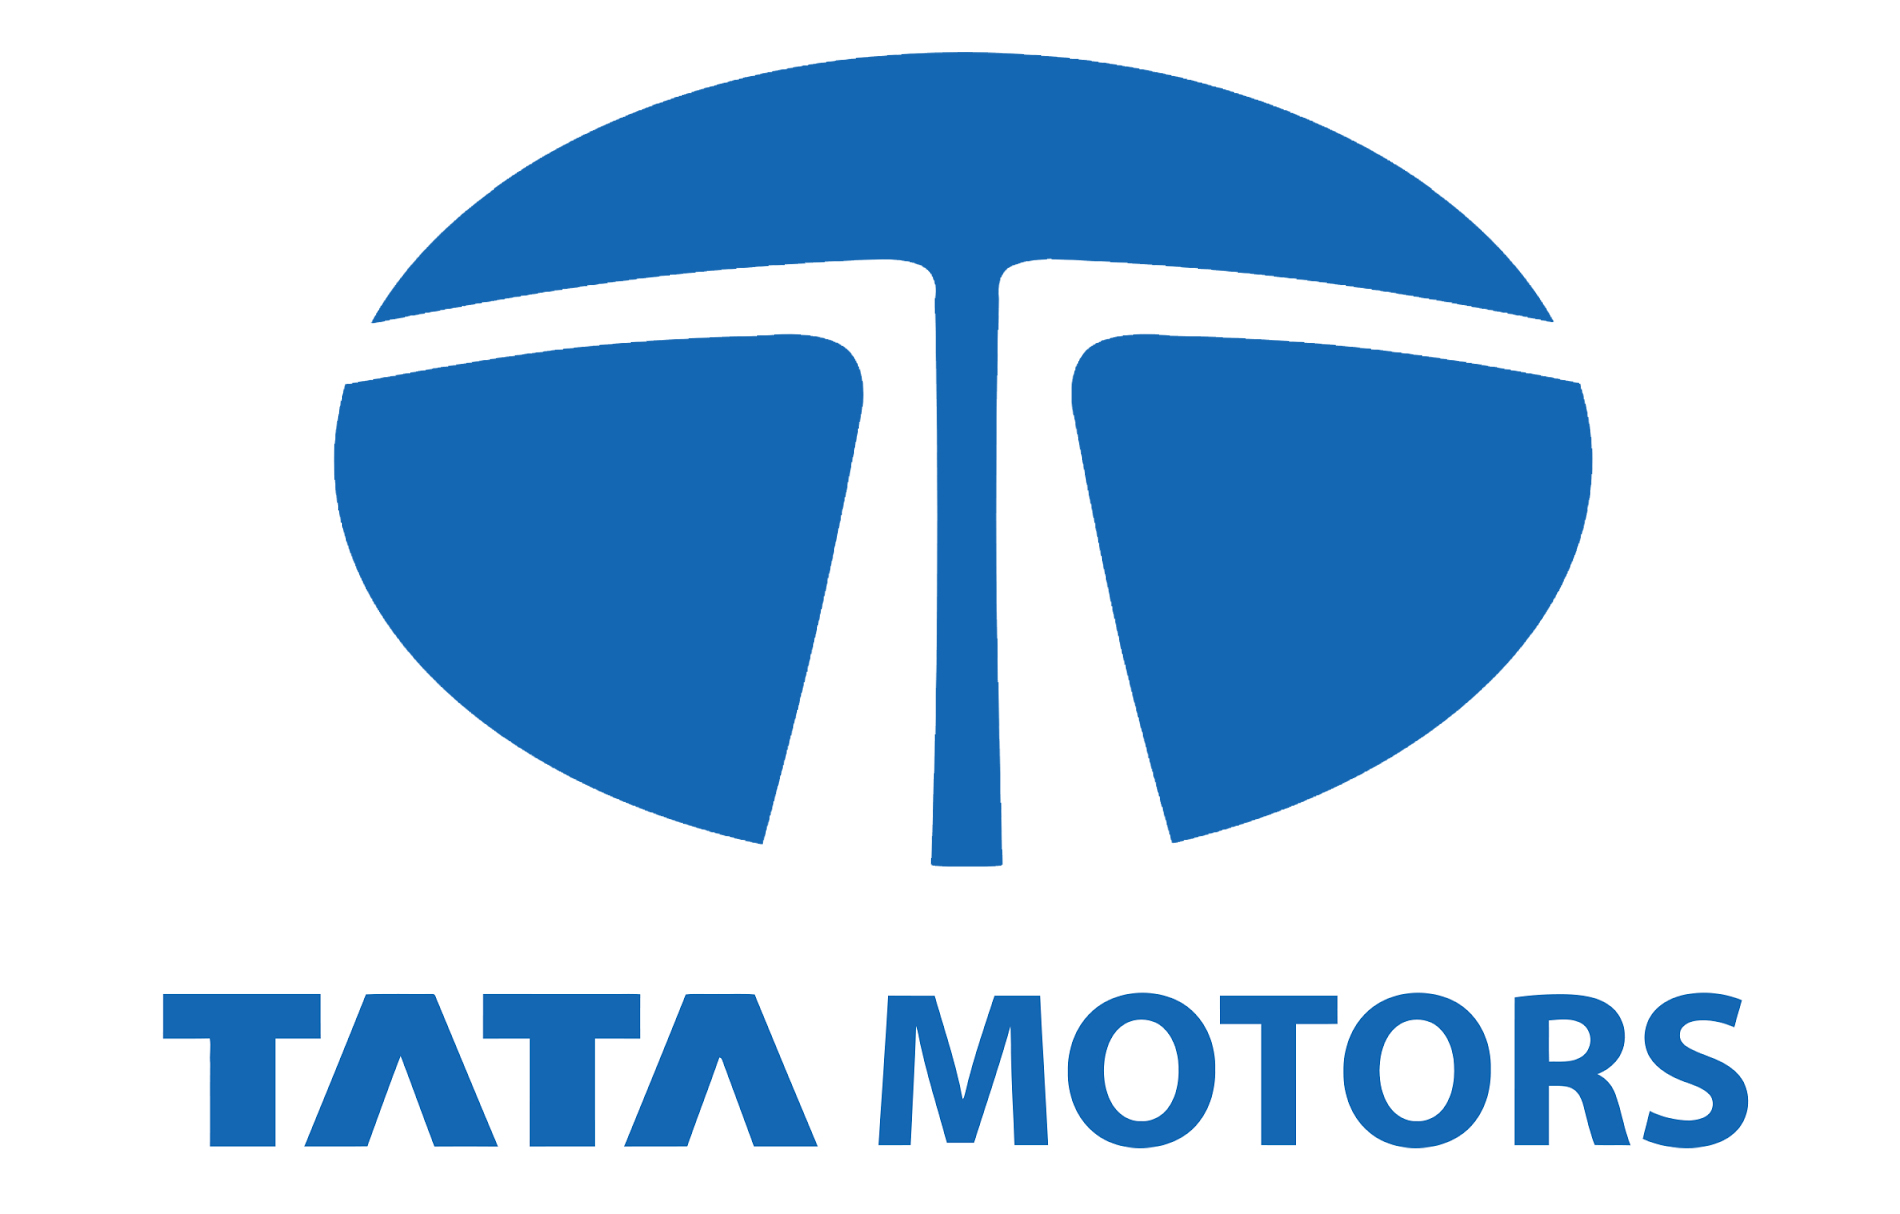 Tata Motors Cars Showroom - Princely Cars Pvt Ltd - Logo